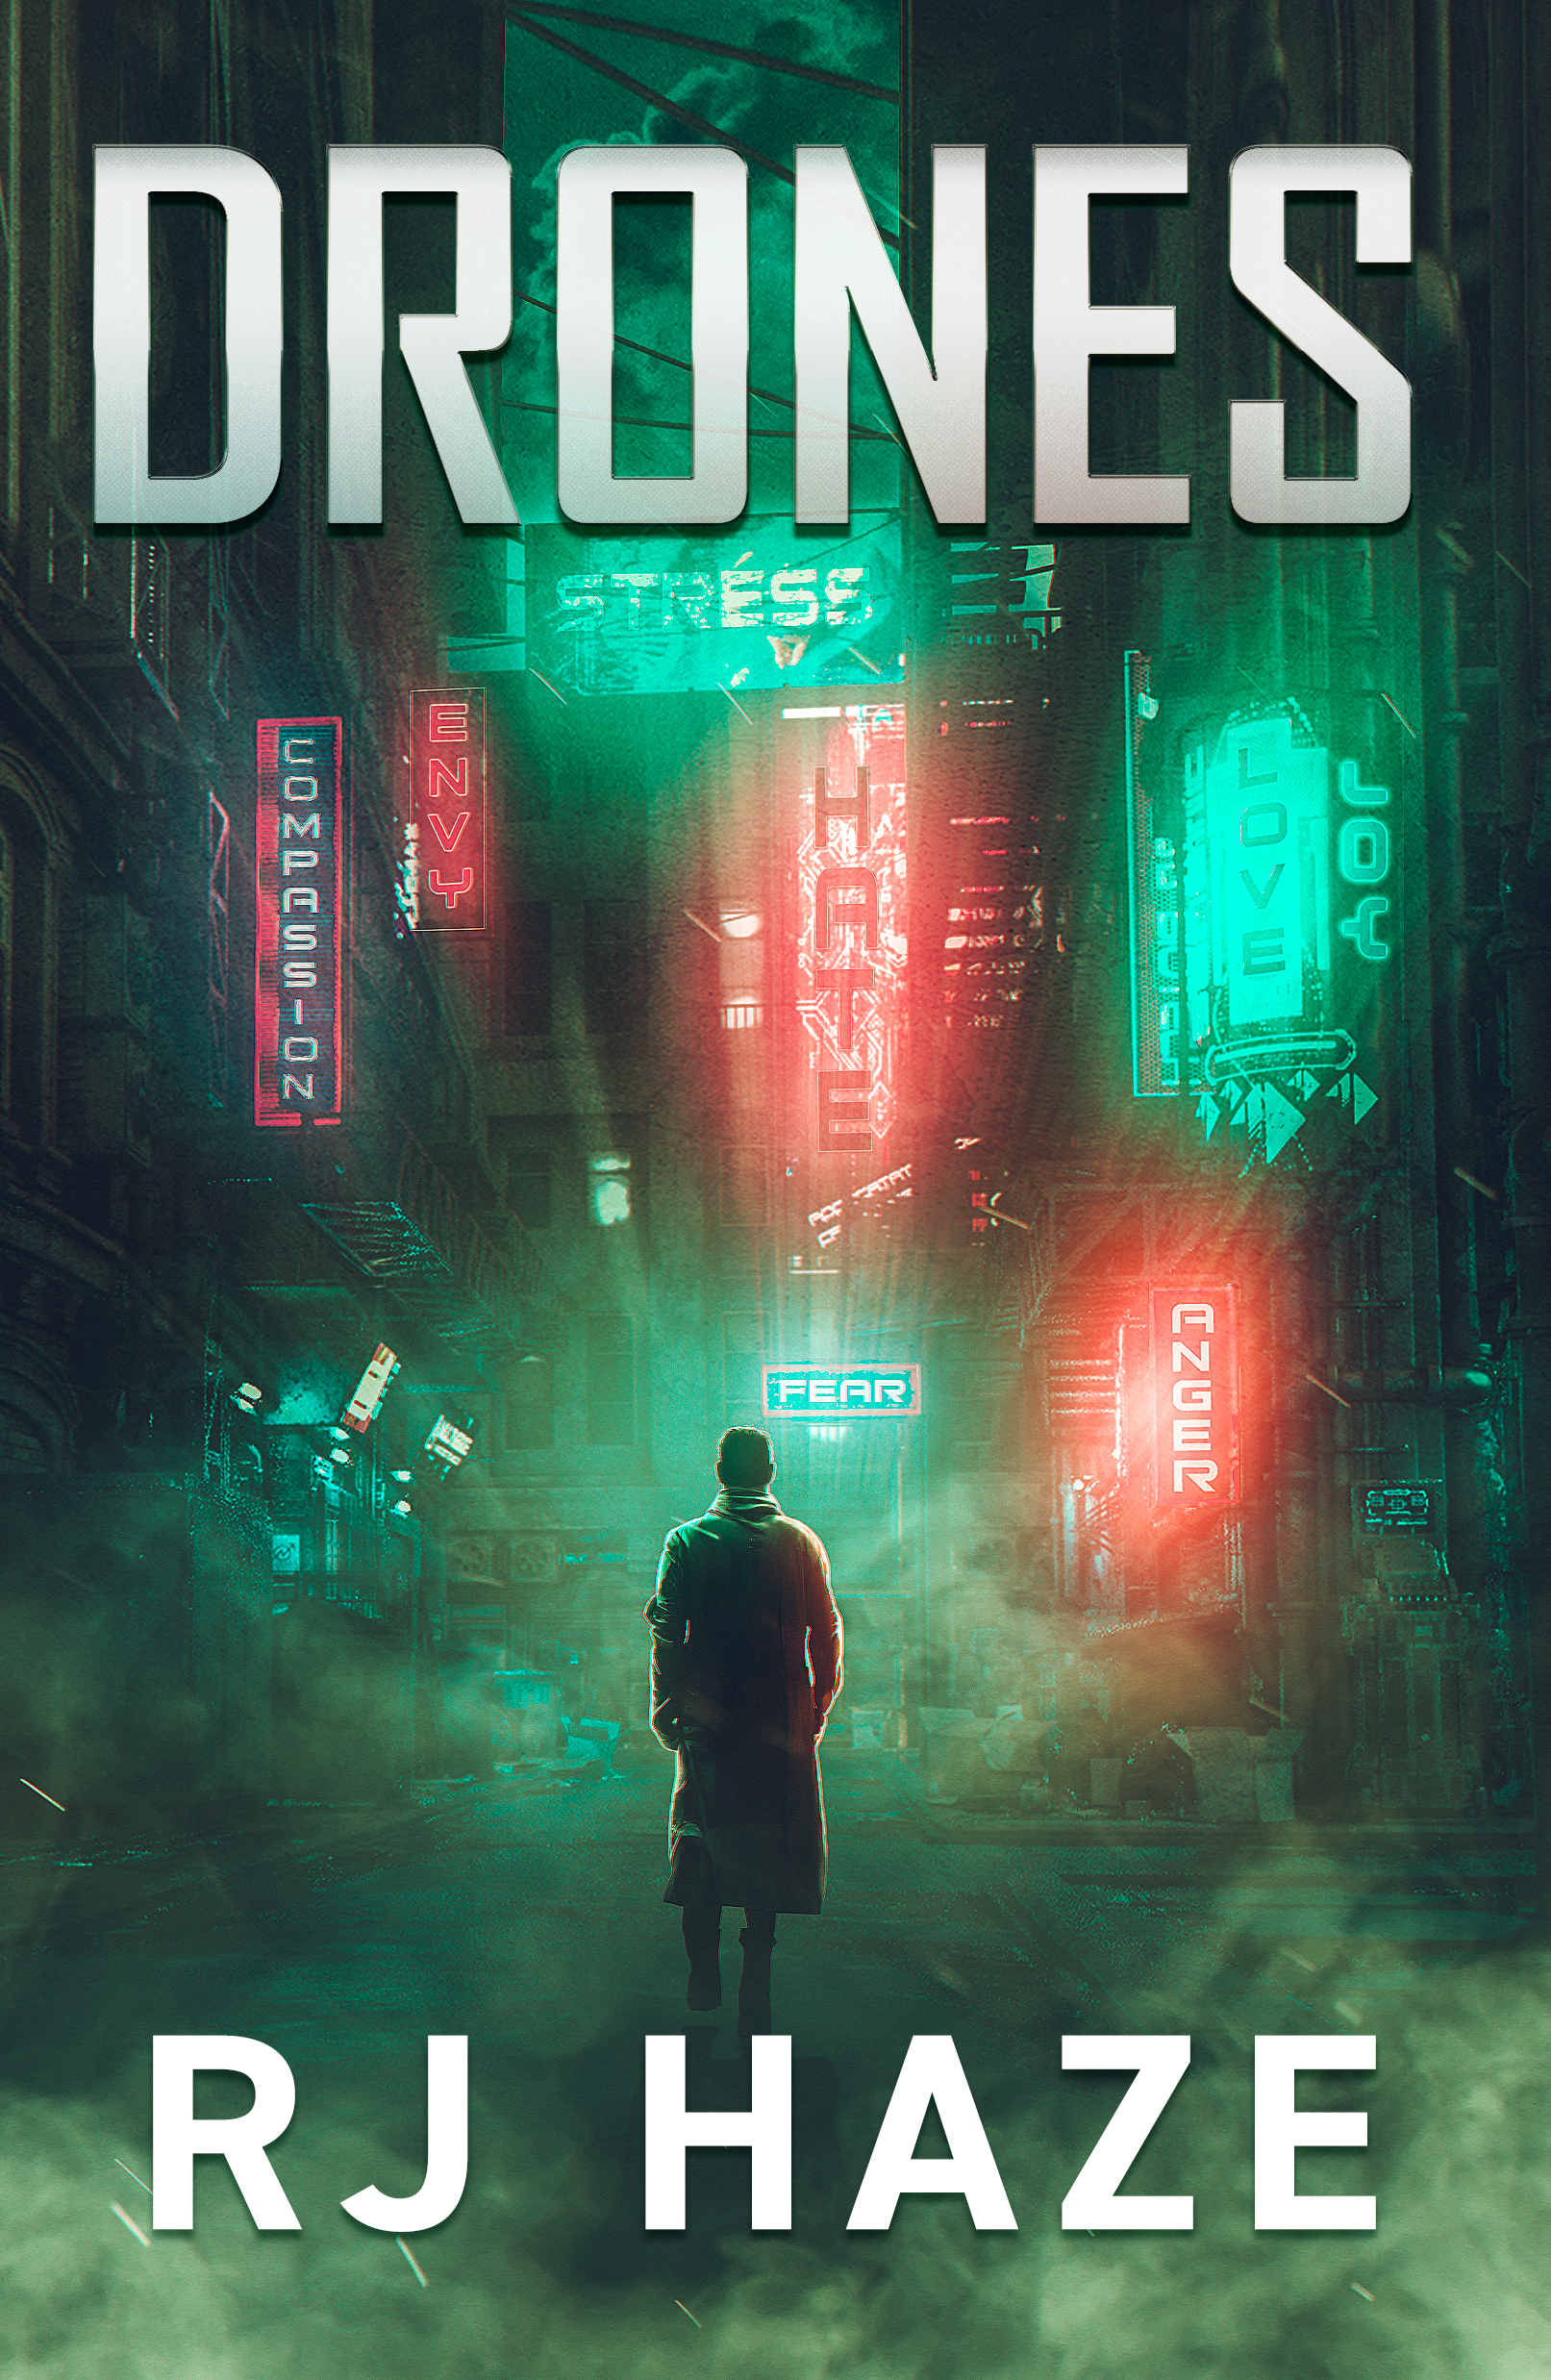 Cover of R.J. Haze's science fiction novel Drones